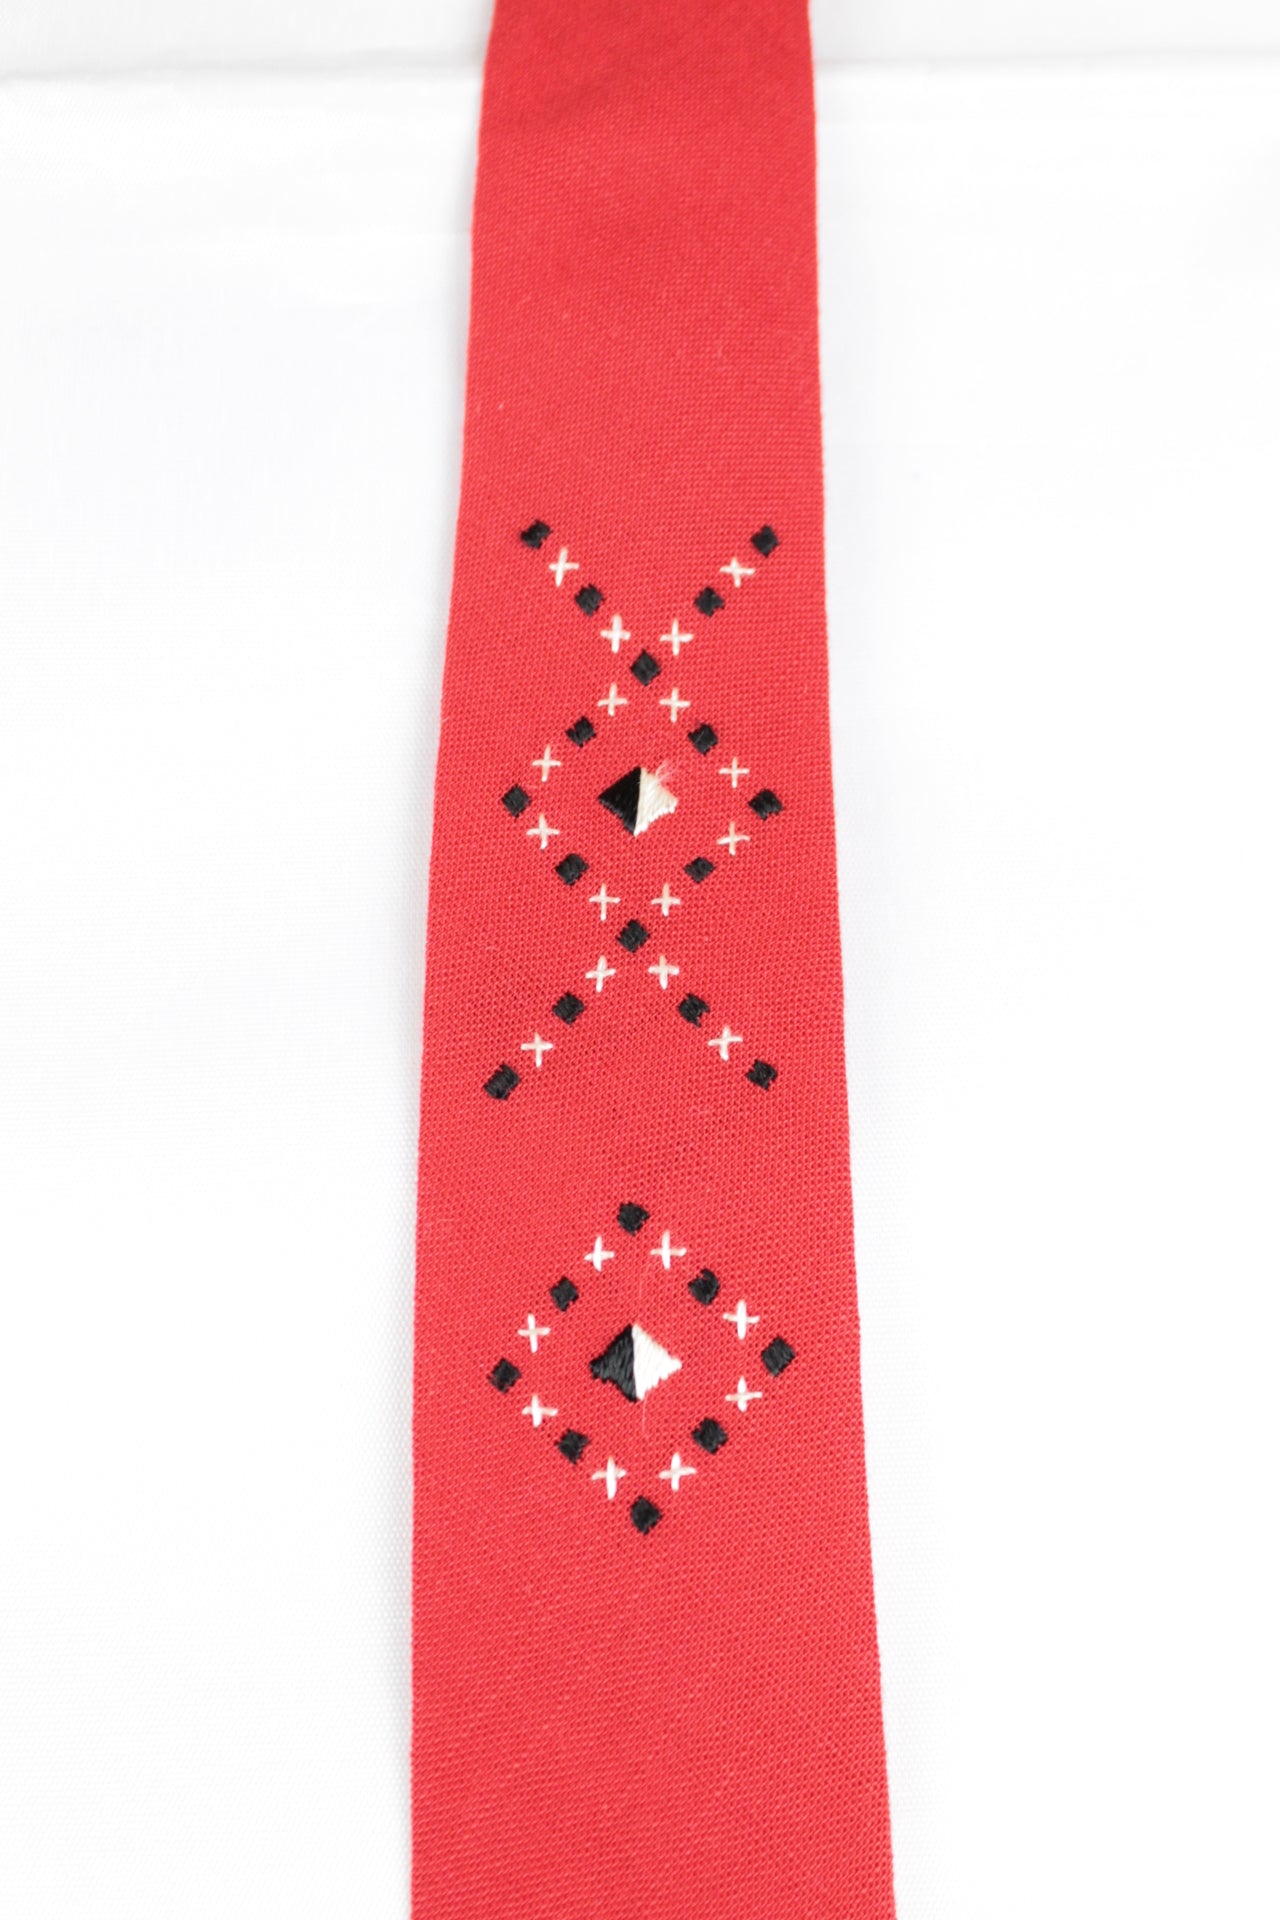 Vintage Red Black White Detail Straight Narrow Skinny Tie 1960s/70s